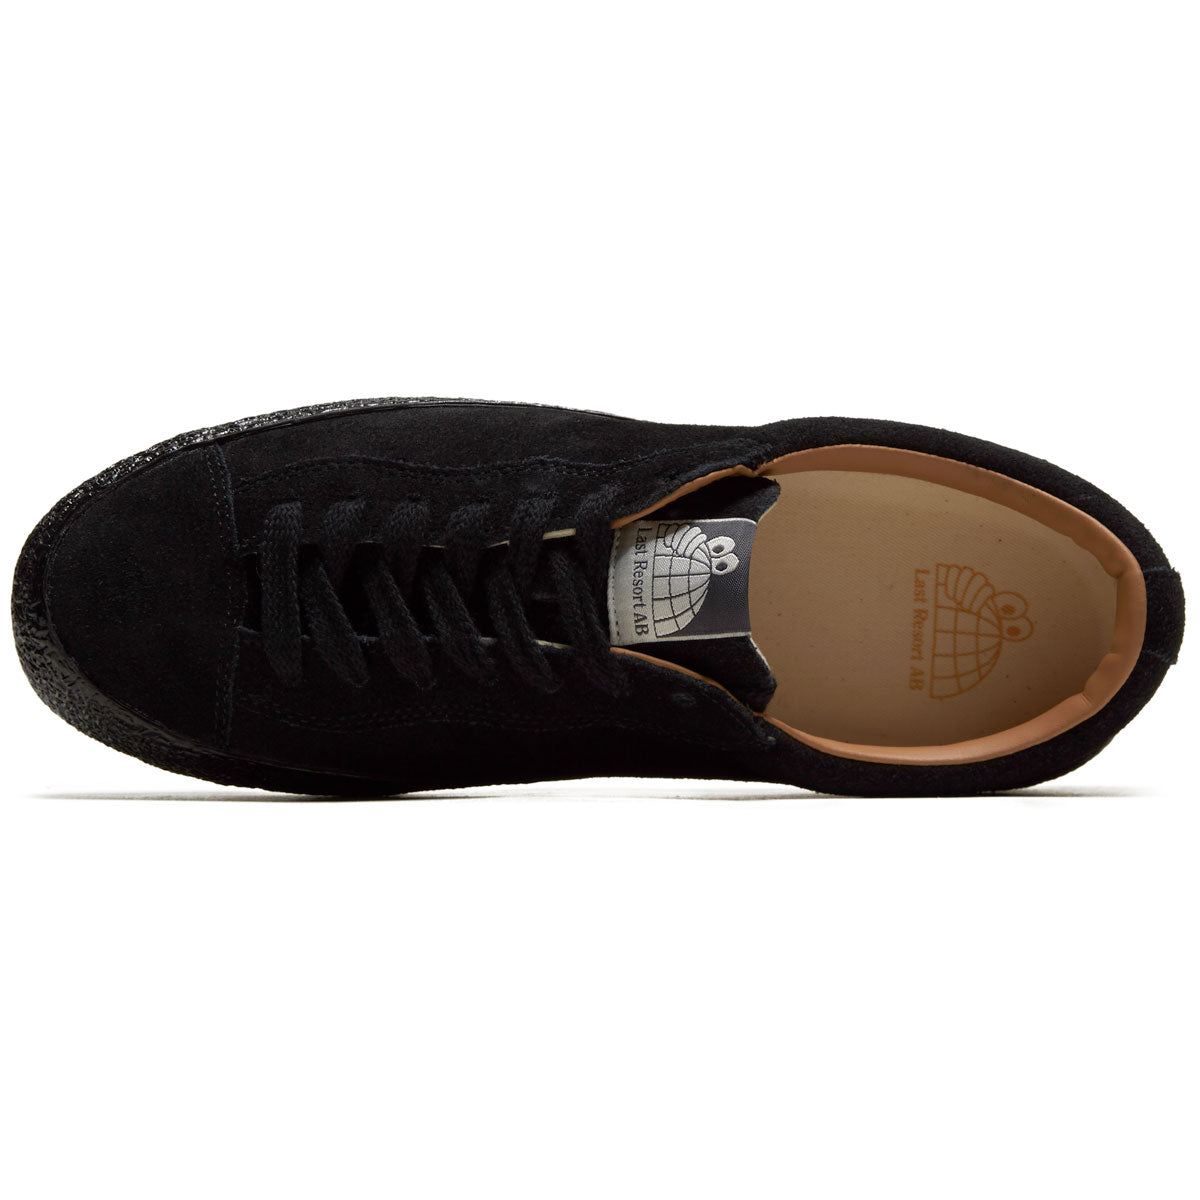 Last Resort AB VM002 Suede Lo Shoes - 3 x Black/Black image 3